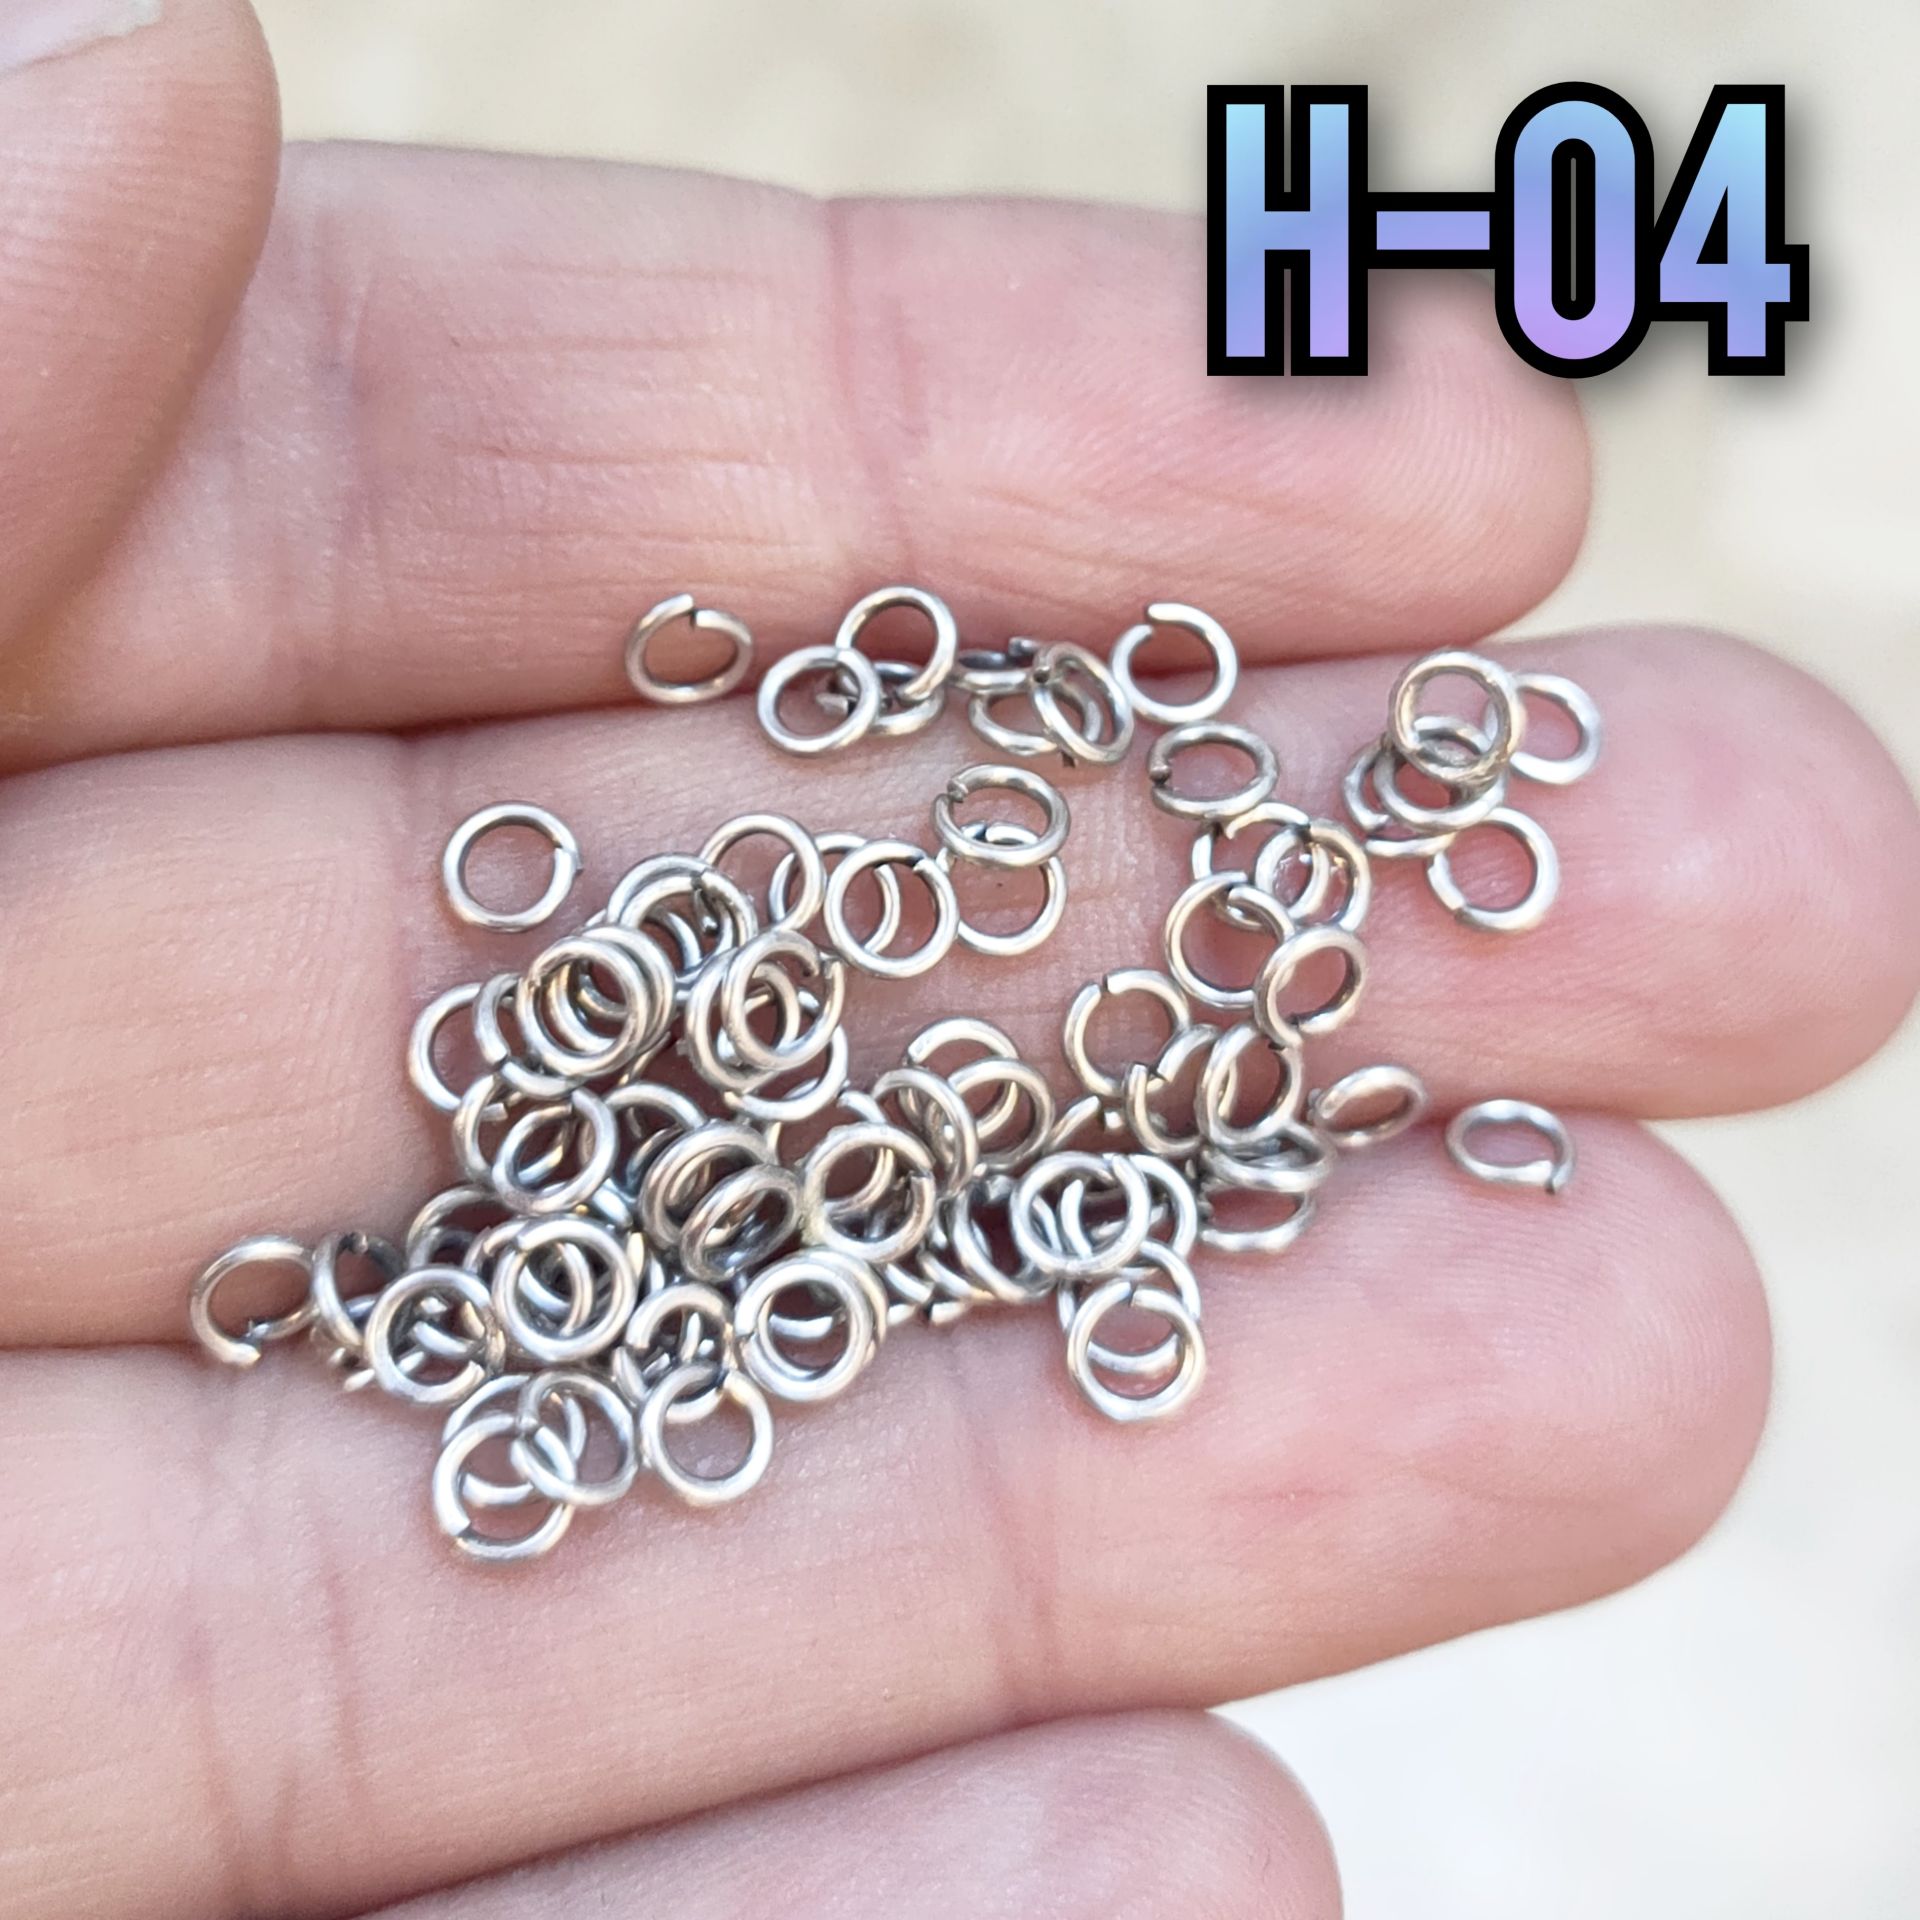 H-04 gümüş kaplama 4 mm halka 5 gr